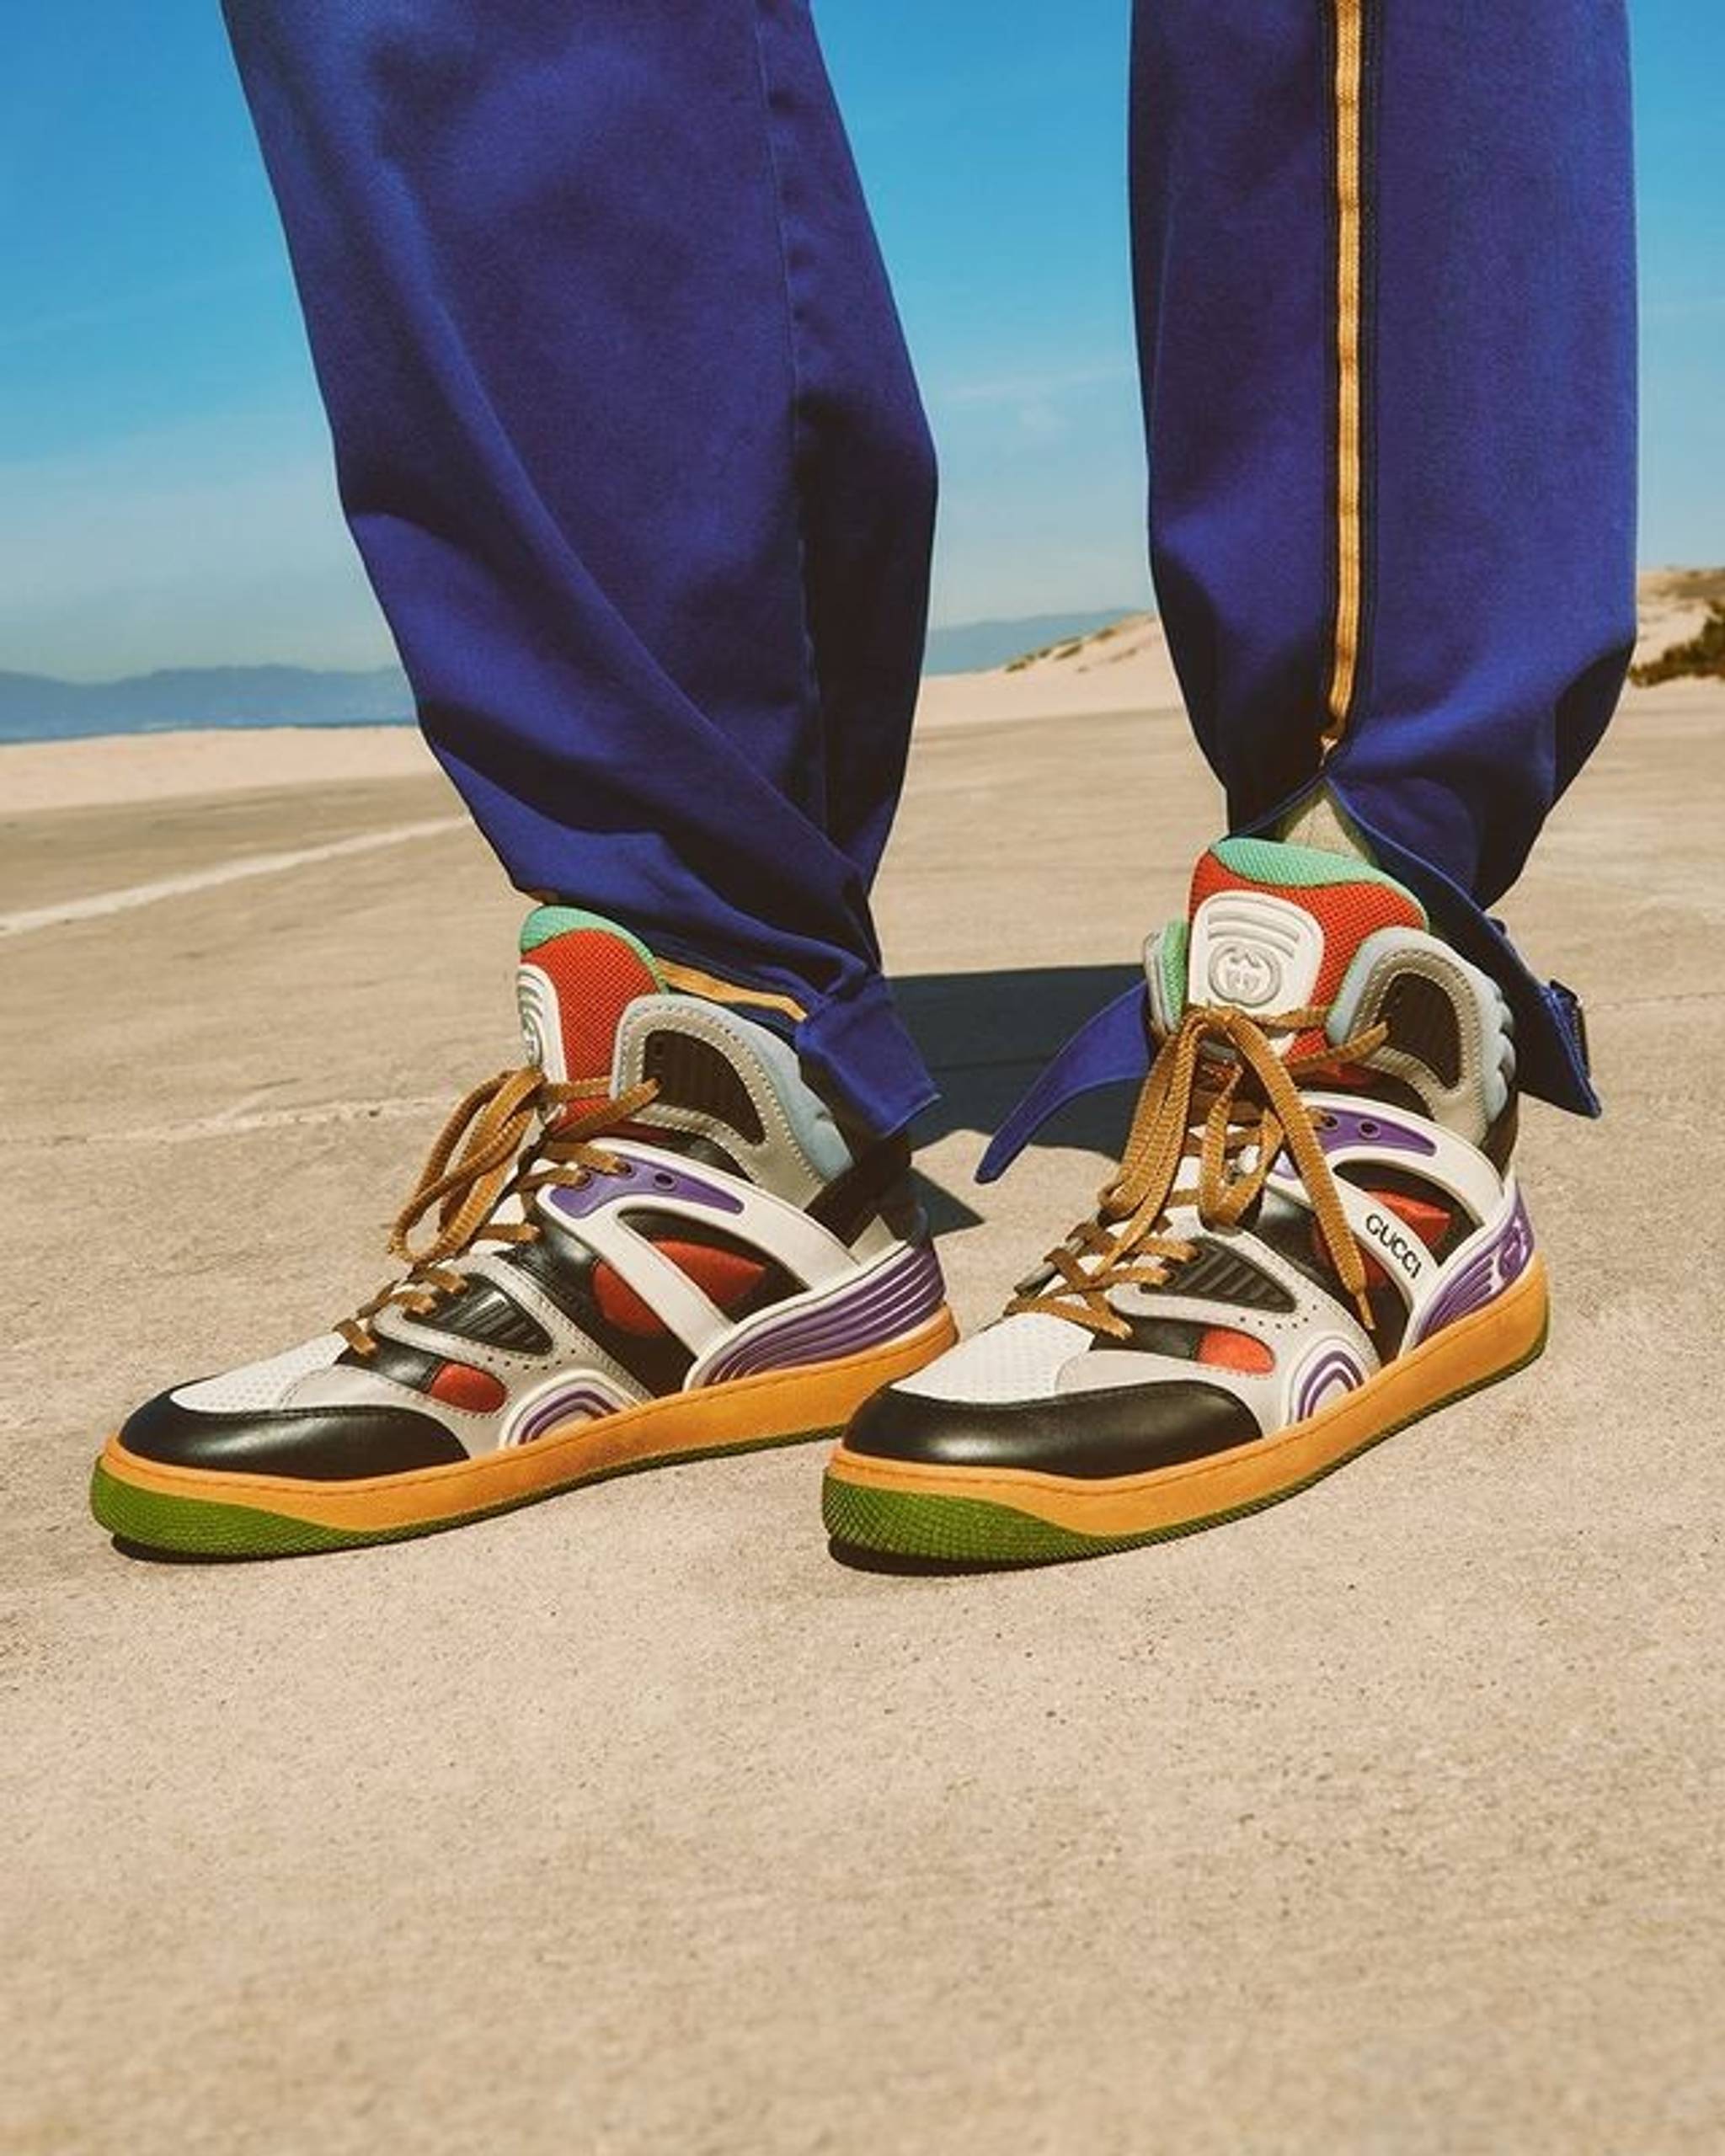 Gucci’s debut vegan sneakers draw scepticism